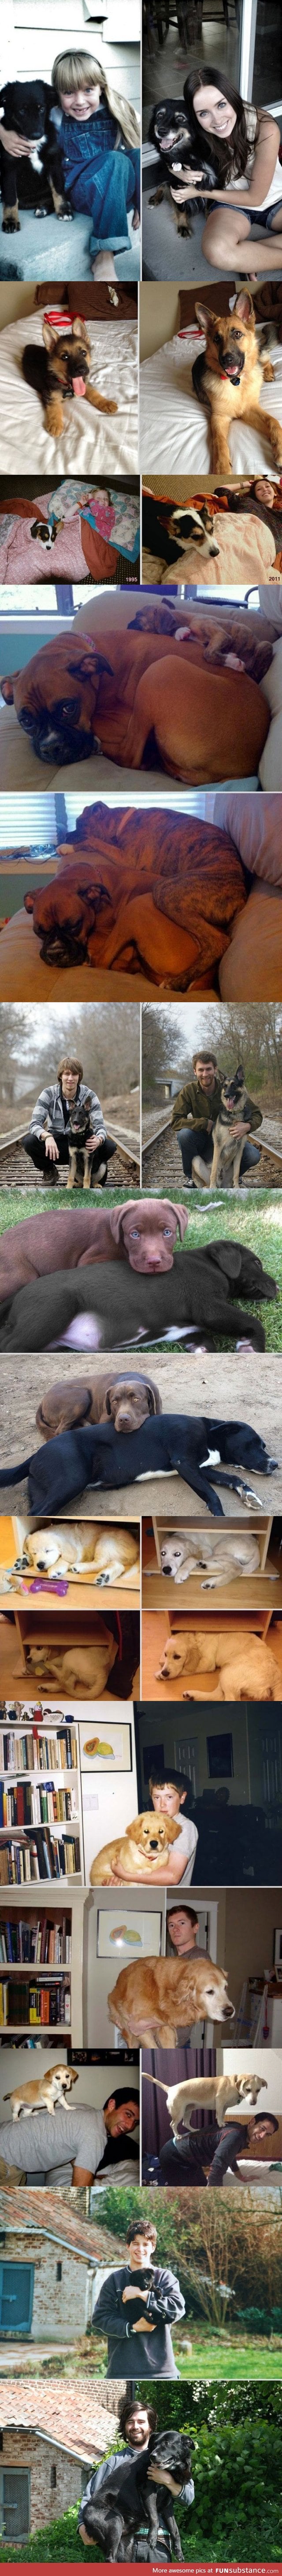 Dogs recreate puppy-hood photos.